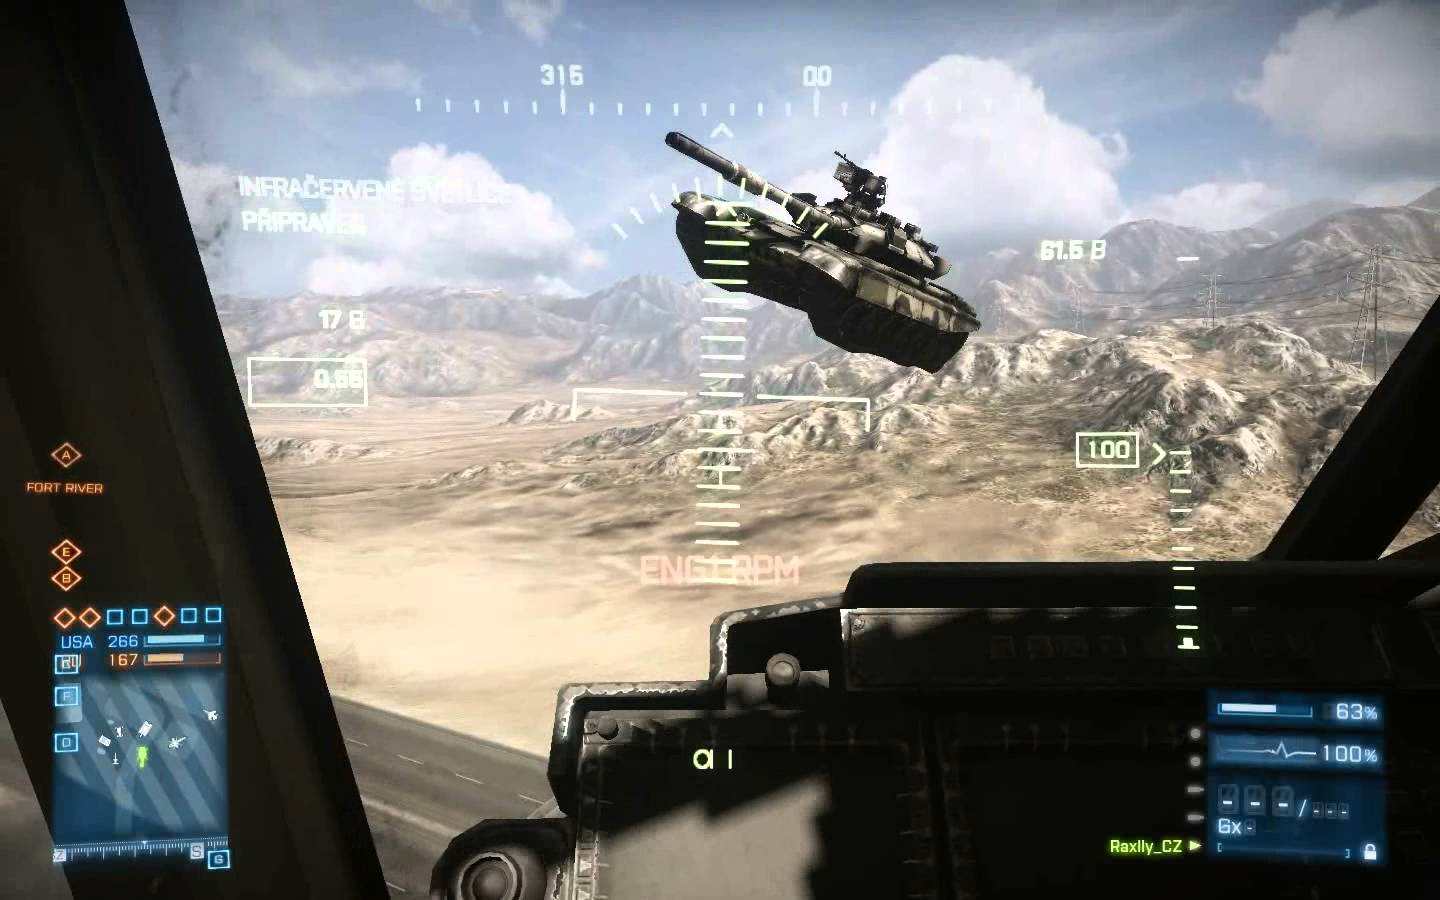 Flying T-90-Only in Battlefield 3? - YouTube